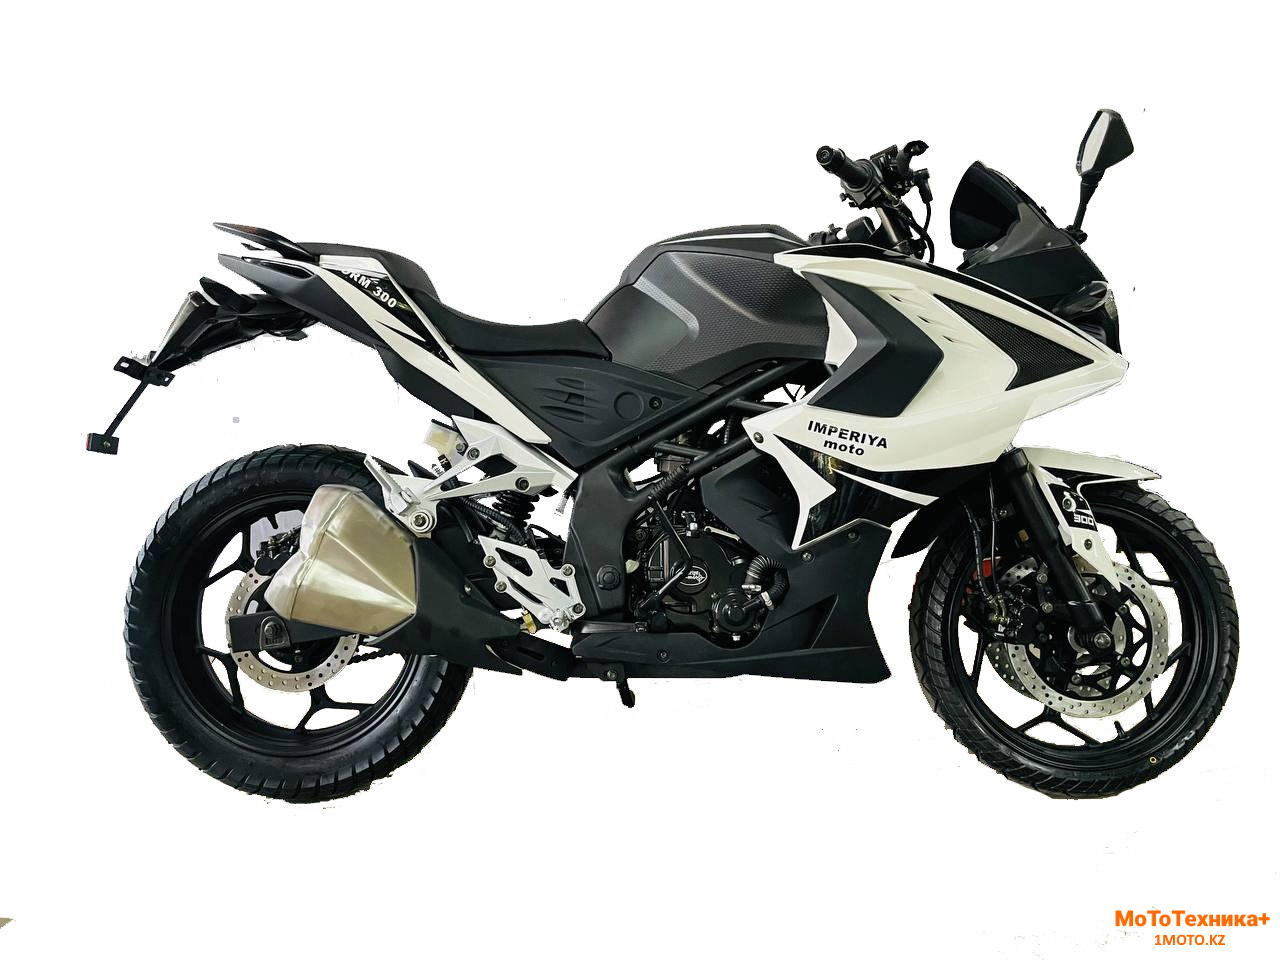 Мотоцикл Imperiya Moto Storm 300